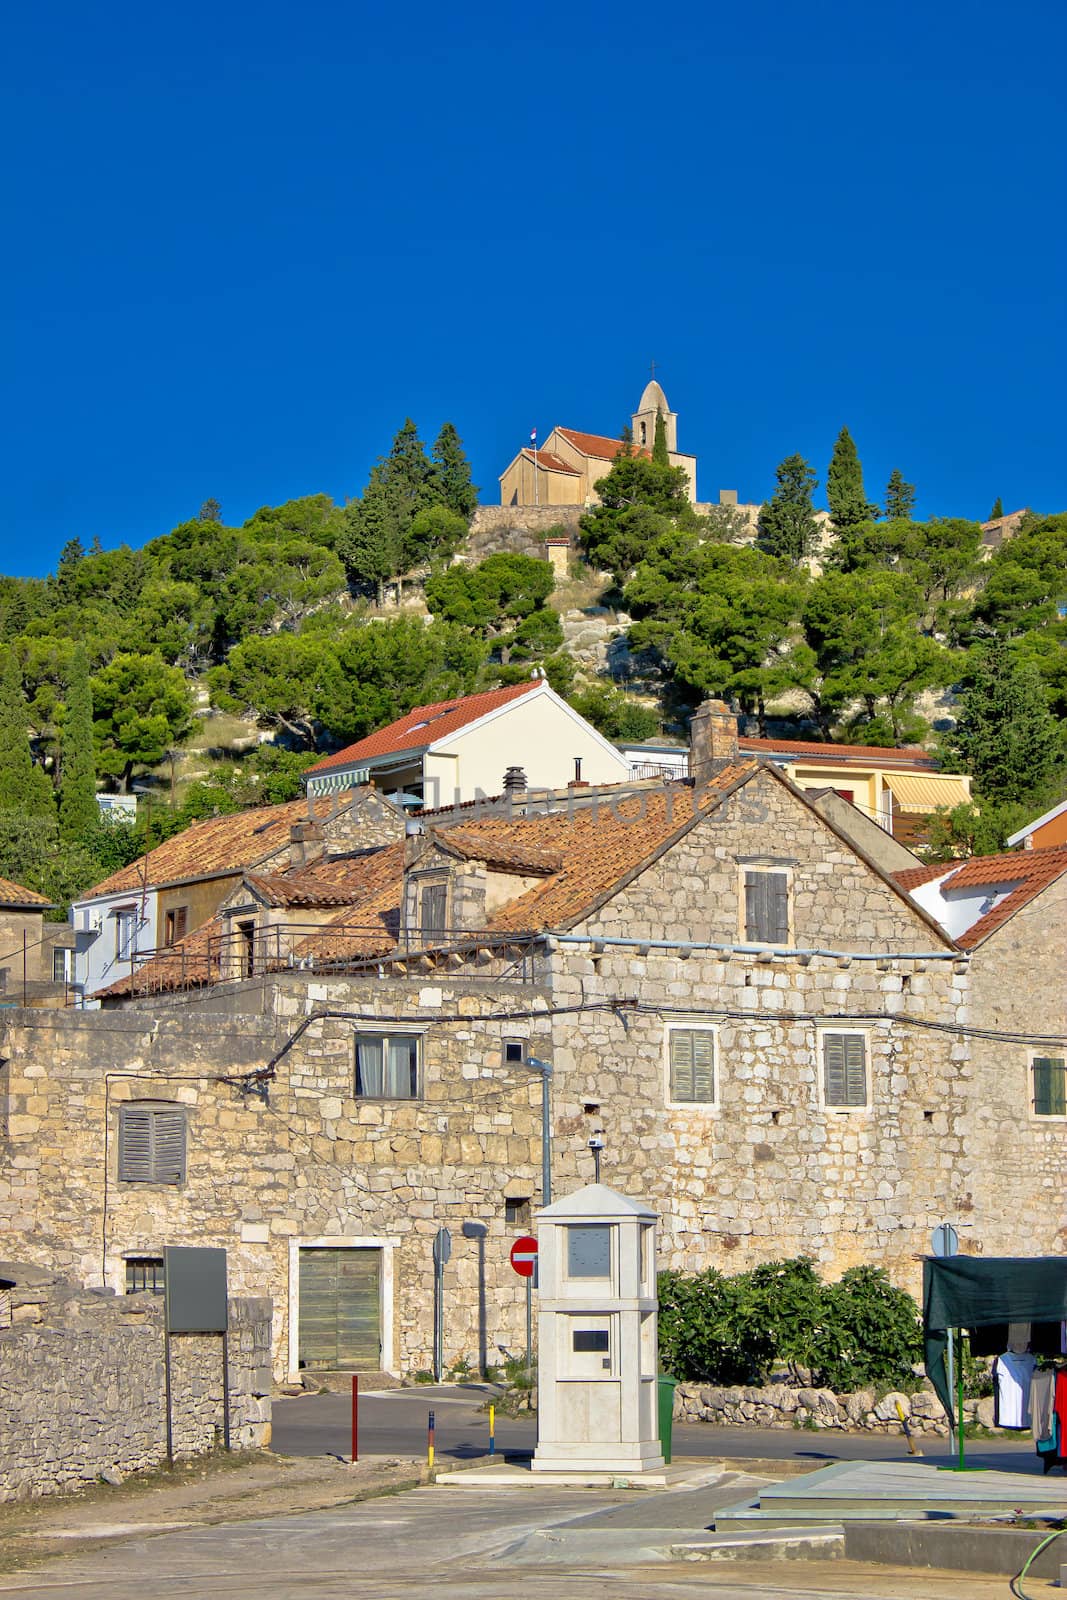 Town of Tribunj Dalmatian architecture by xbrchx